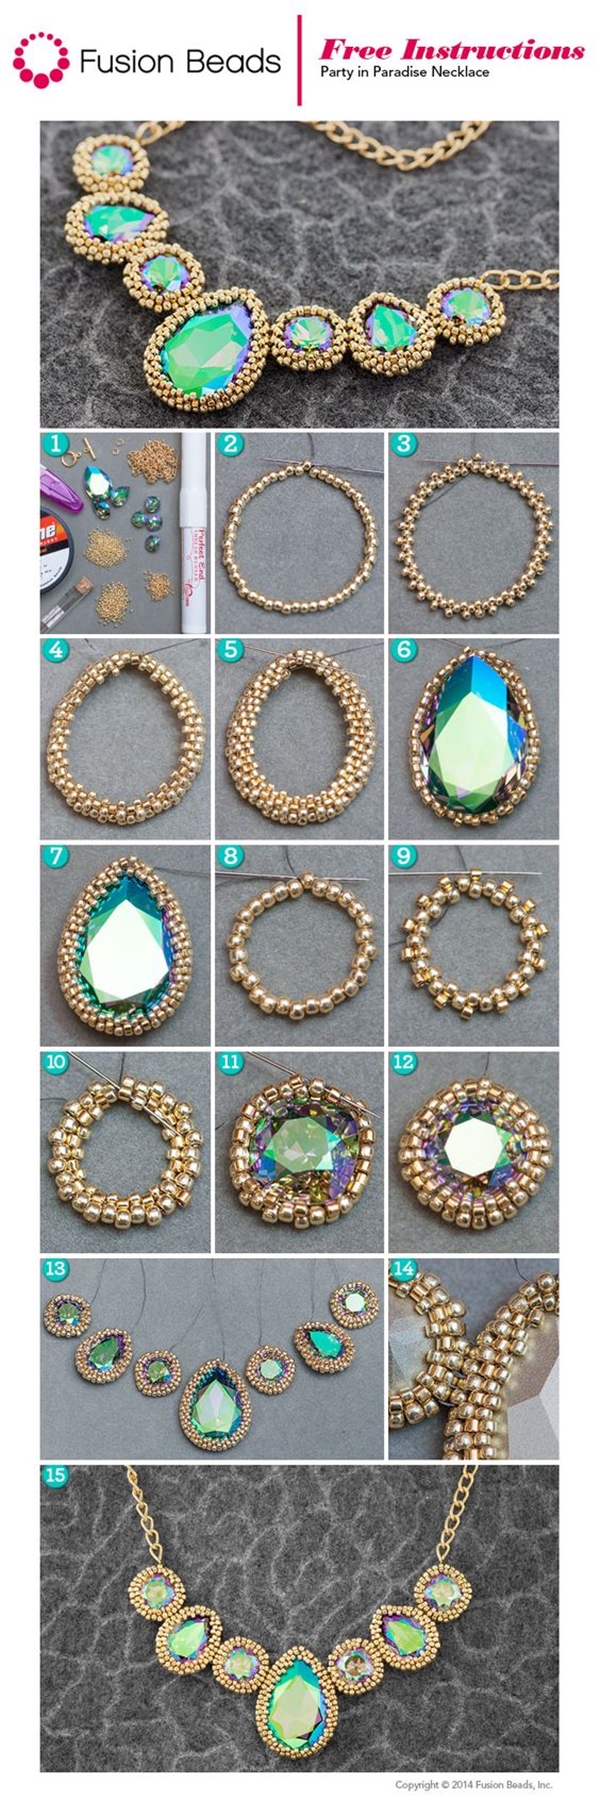 easy-make-diy-jewelry-ideas